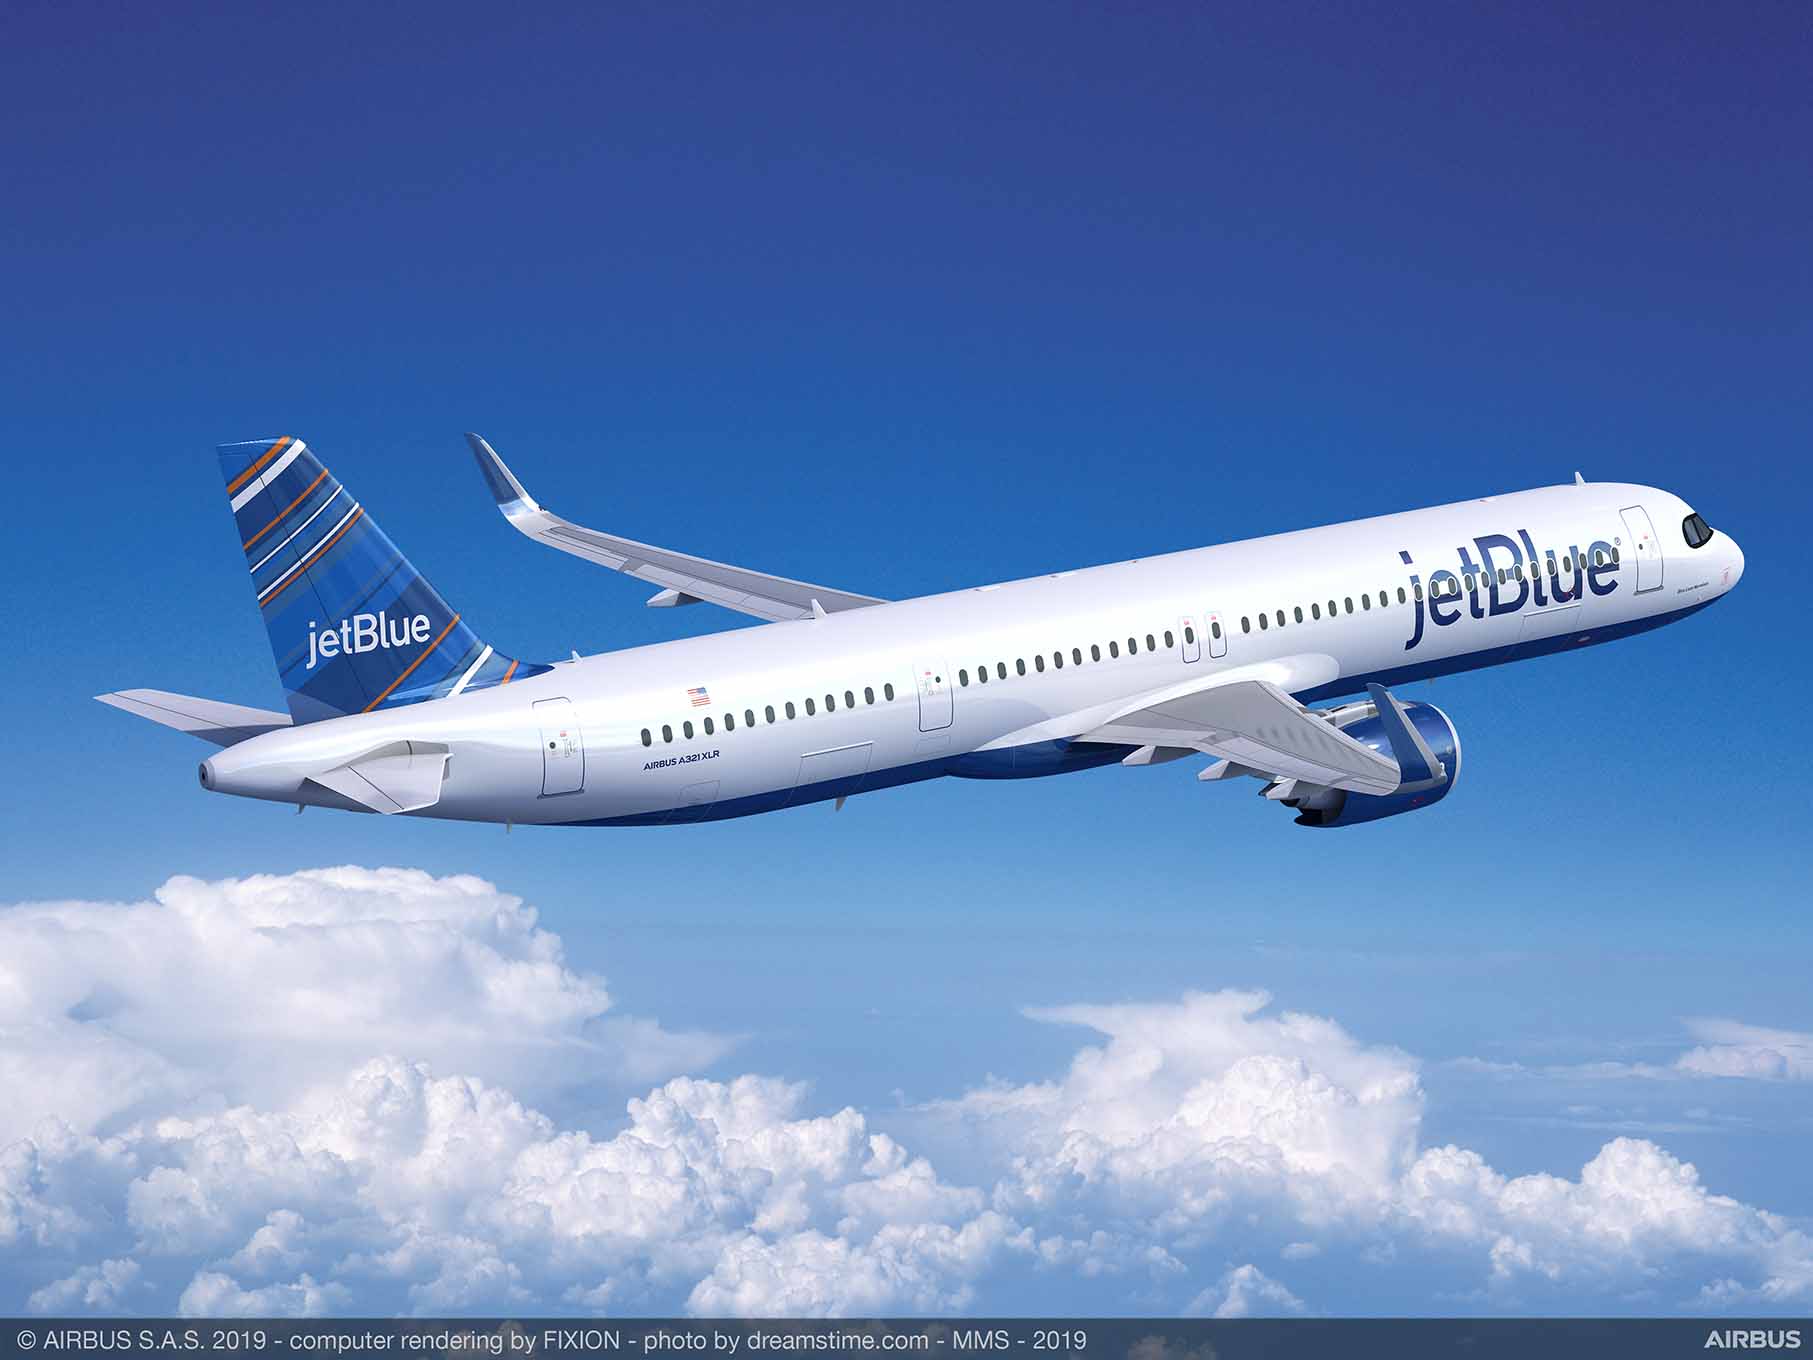 JetBlue begins Amsterdam service from JFK